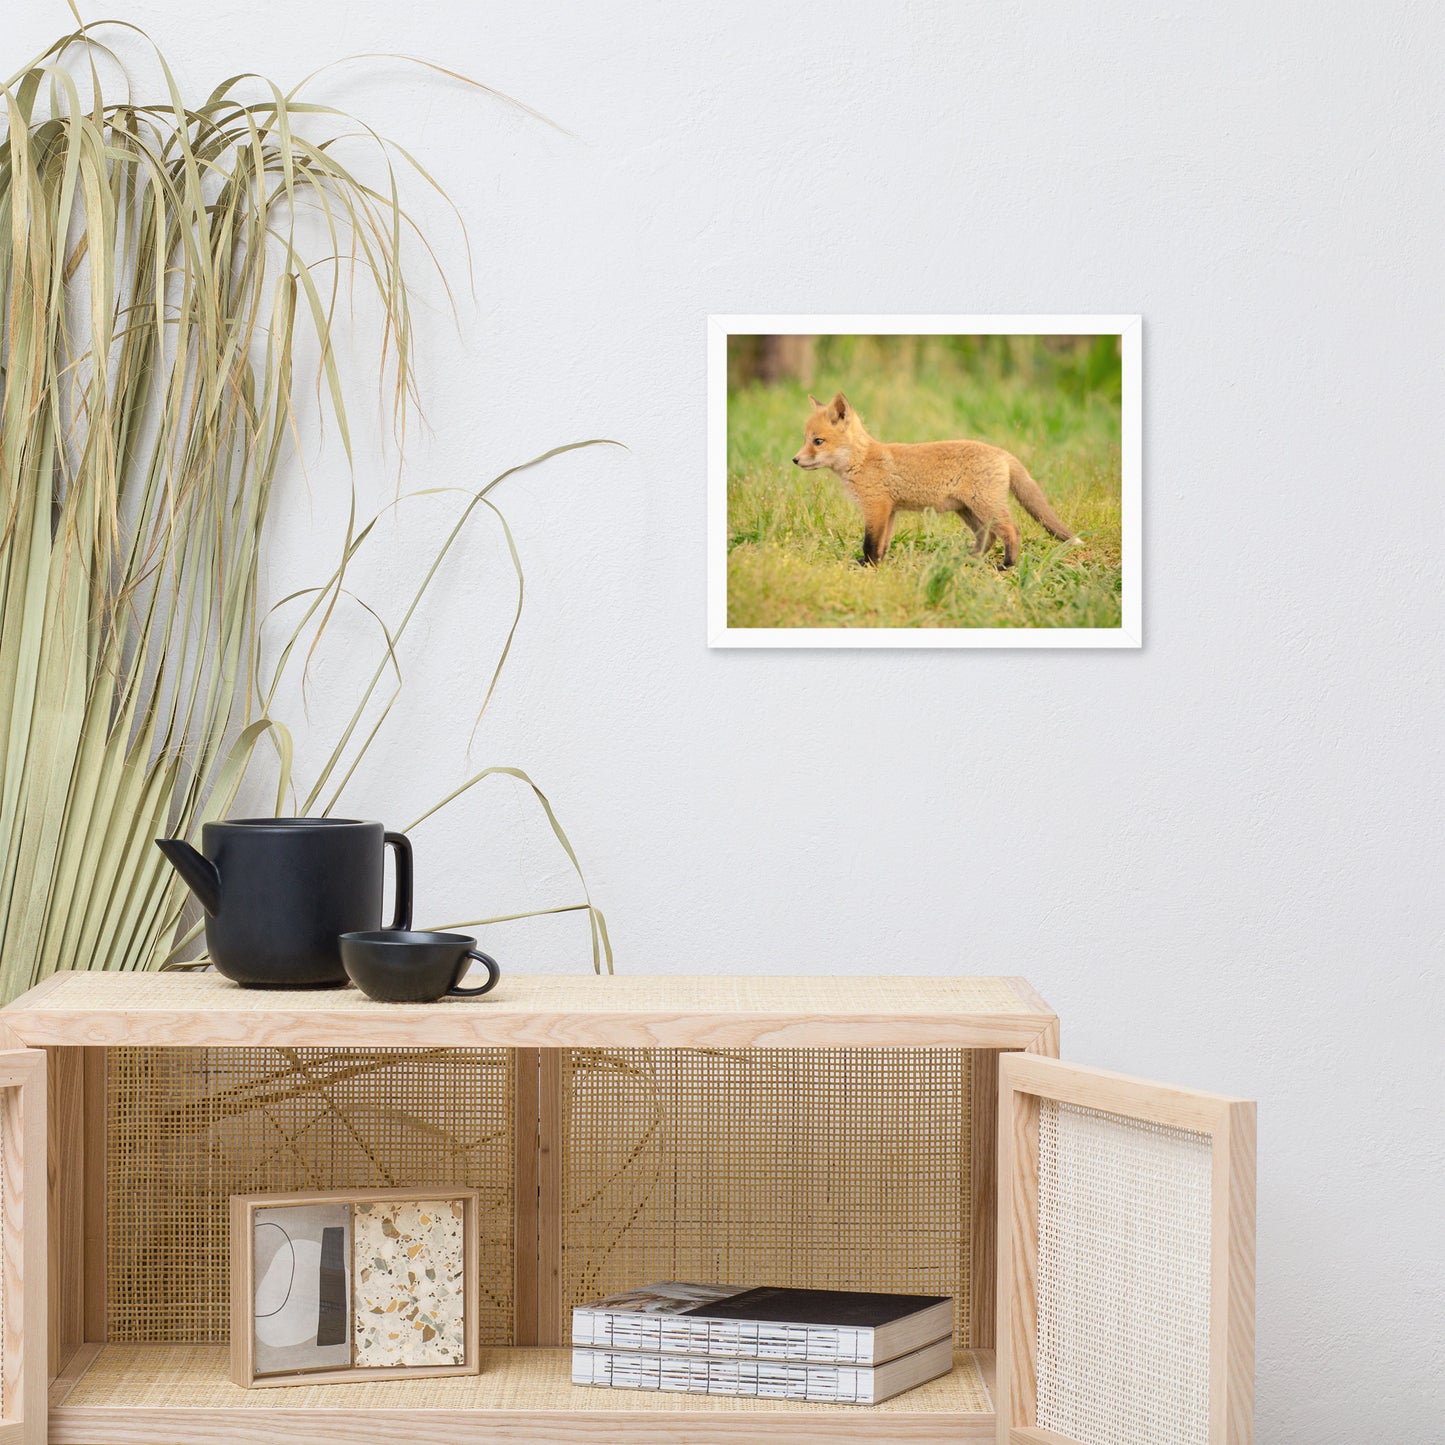 Nursery Room Wall Art: Baby Fox Pup In Meadow/ Animal / Wildlife / Nature Photographic Artwork - Framed Artwork - Wall Decor